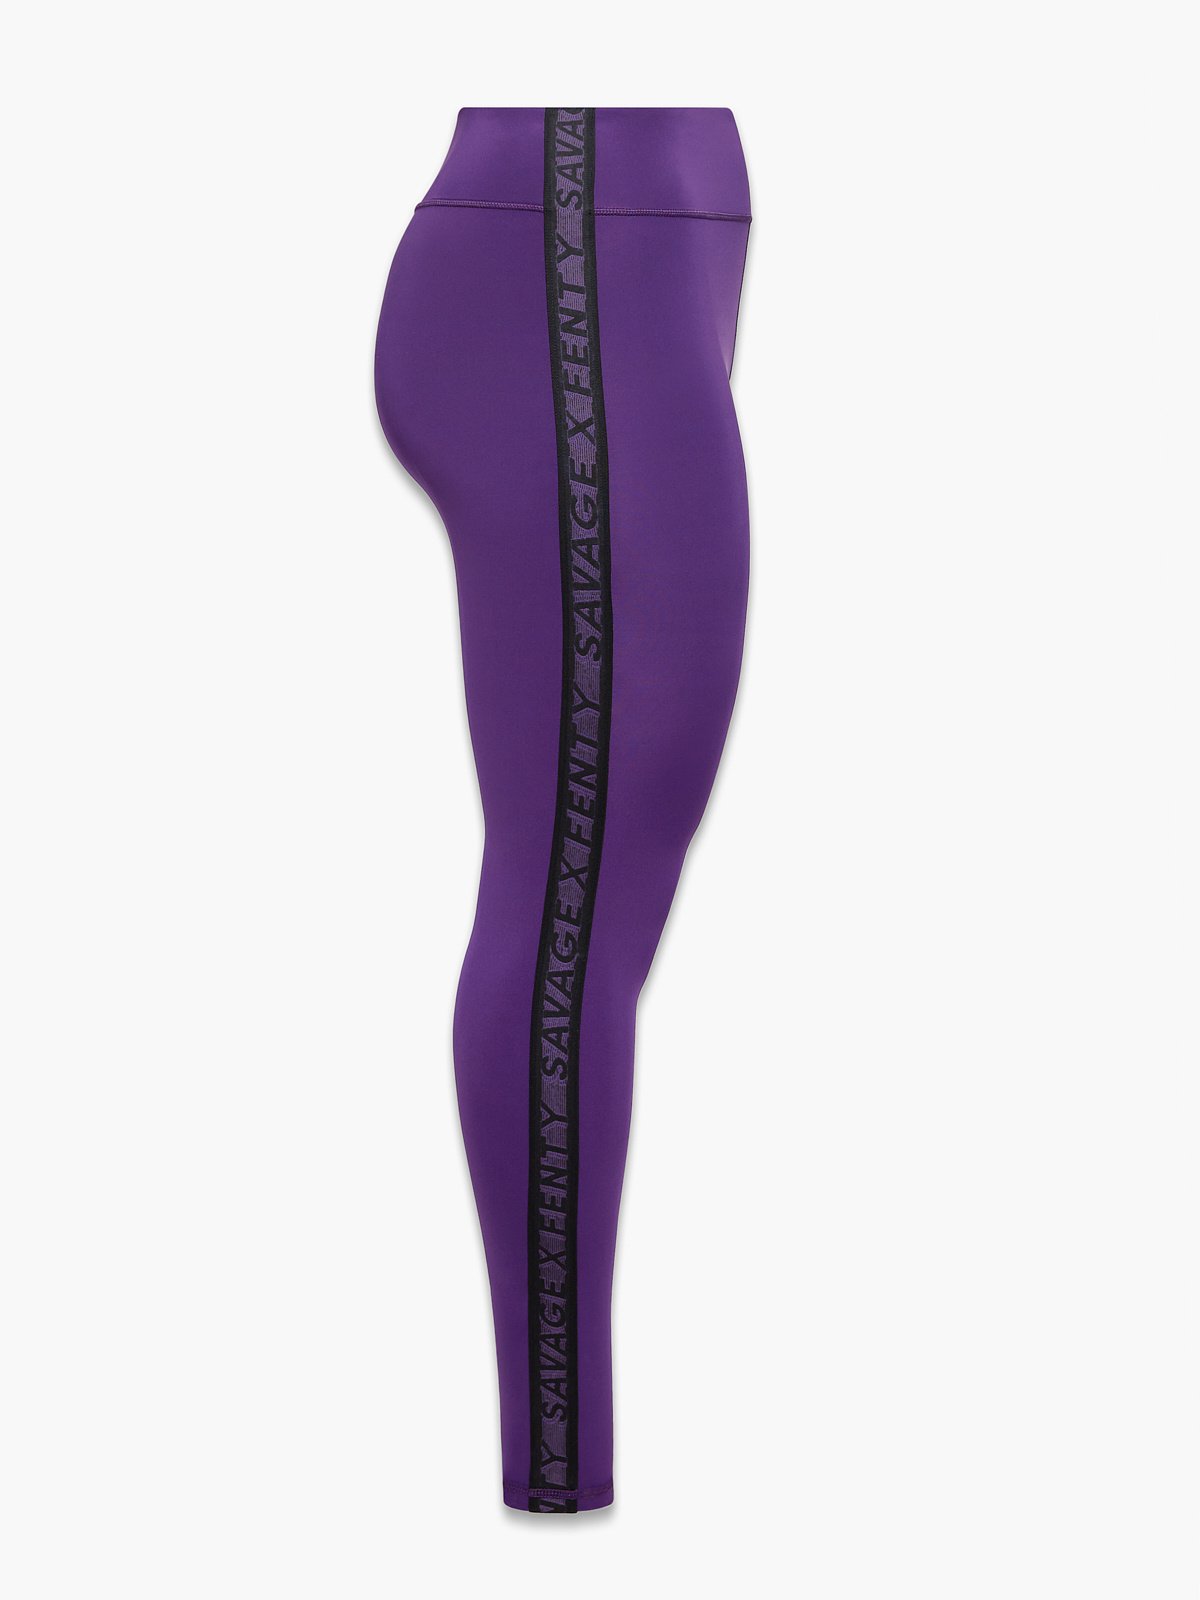 Main Player High-Waist Legging in Purple